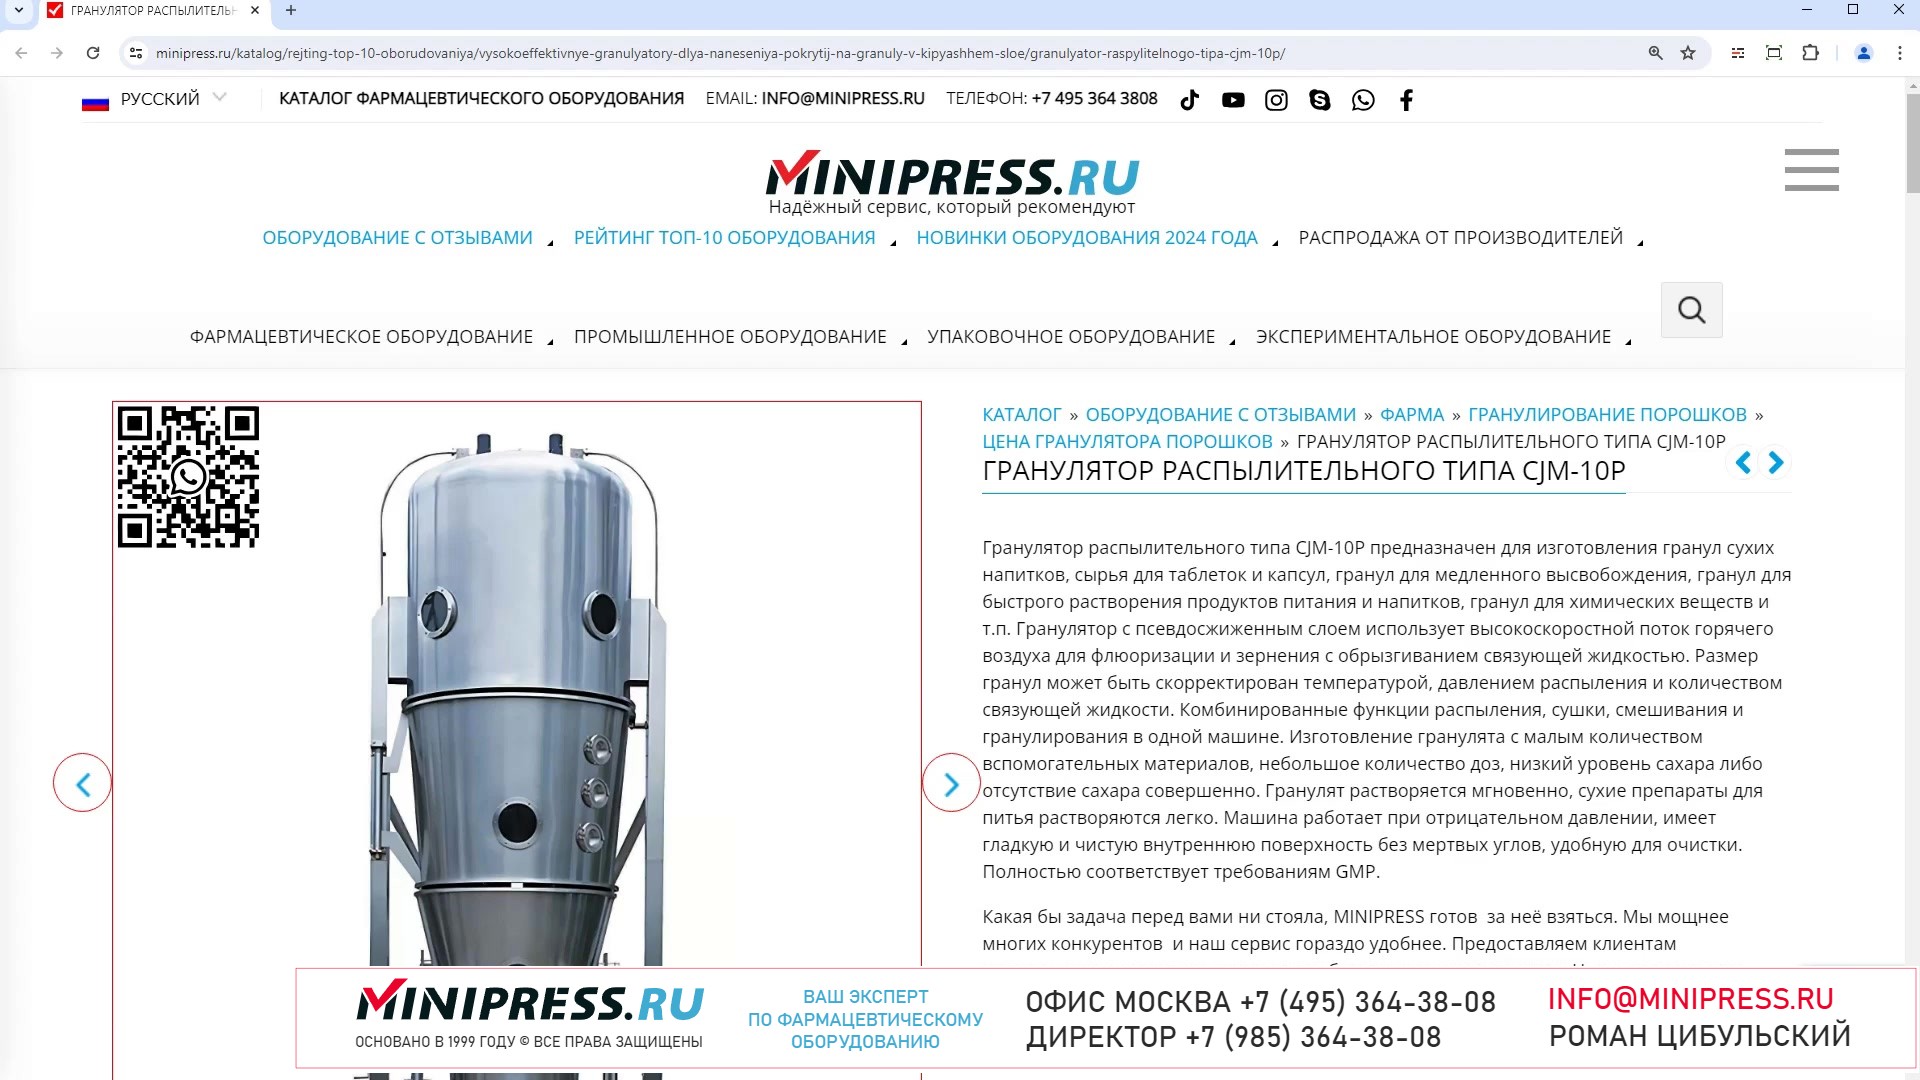 Minipress.ru Гранулятор распылительного типа CJM-10P